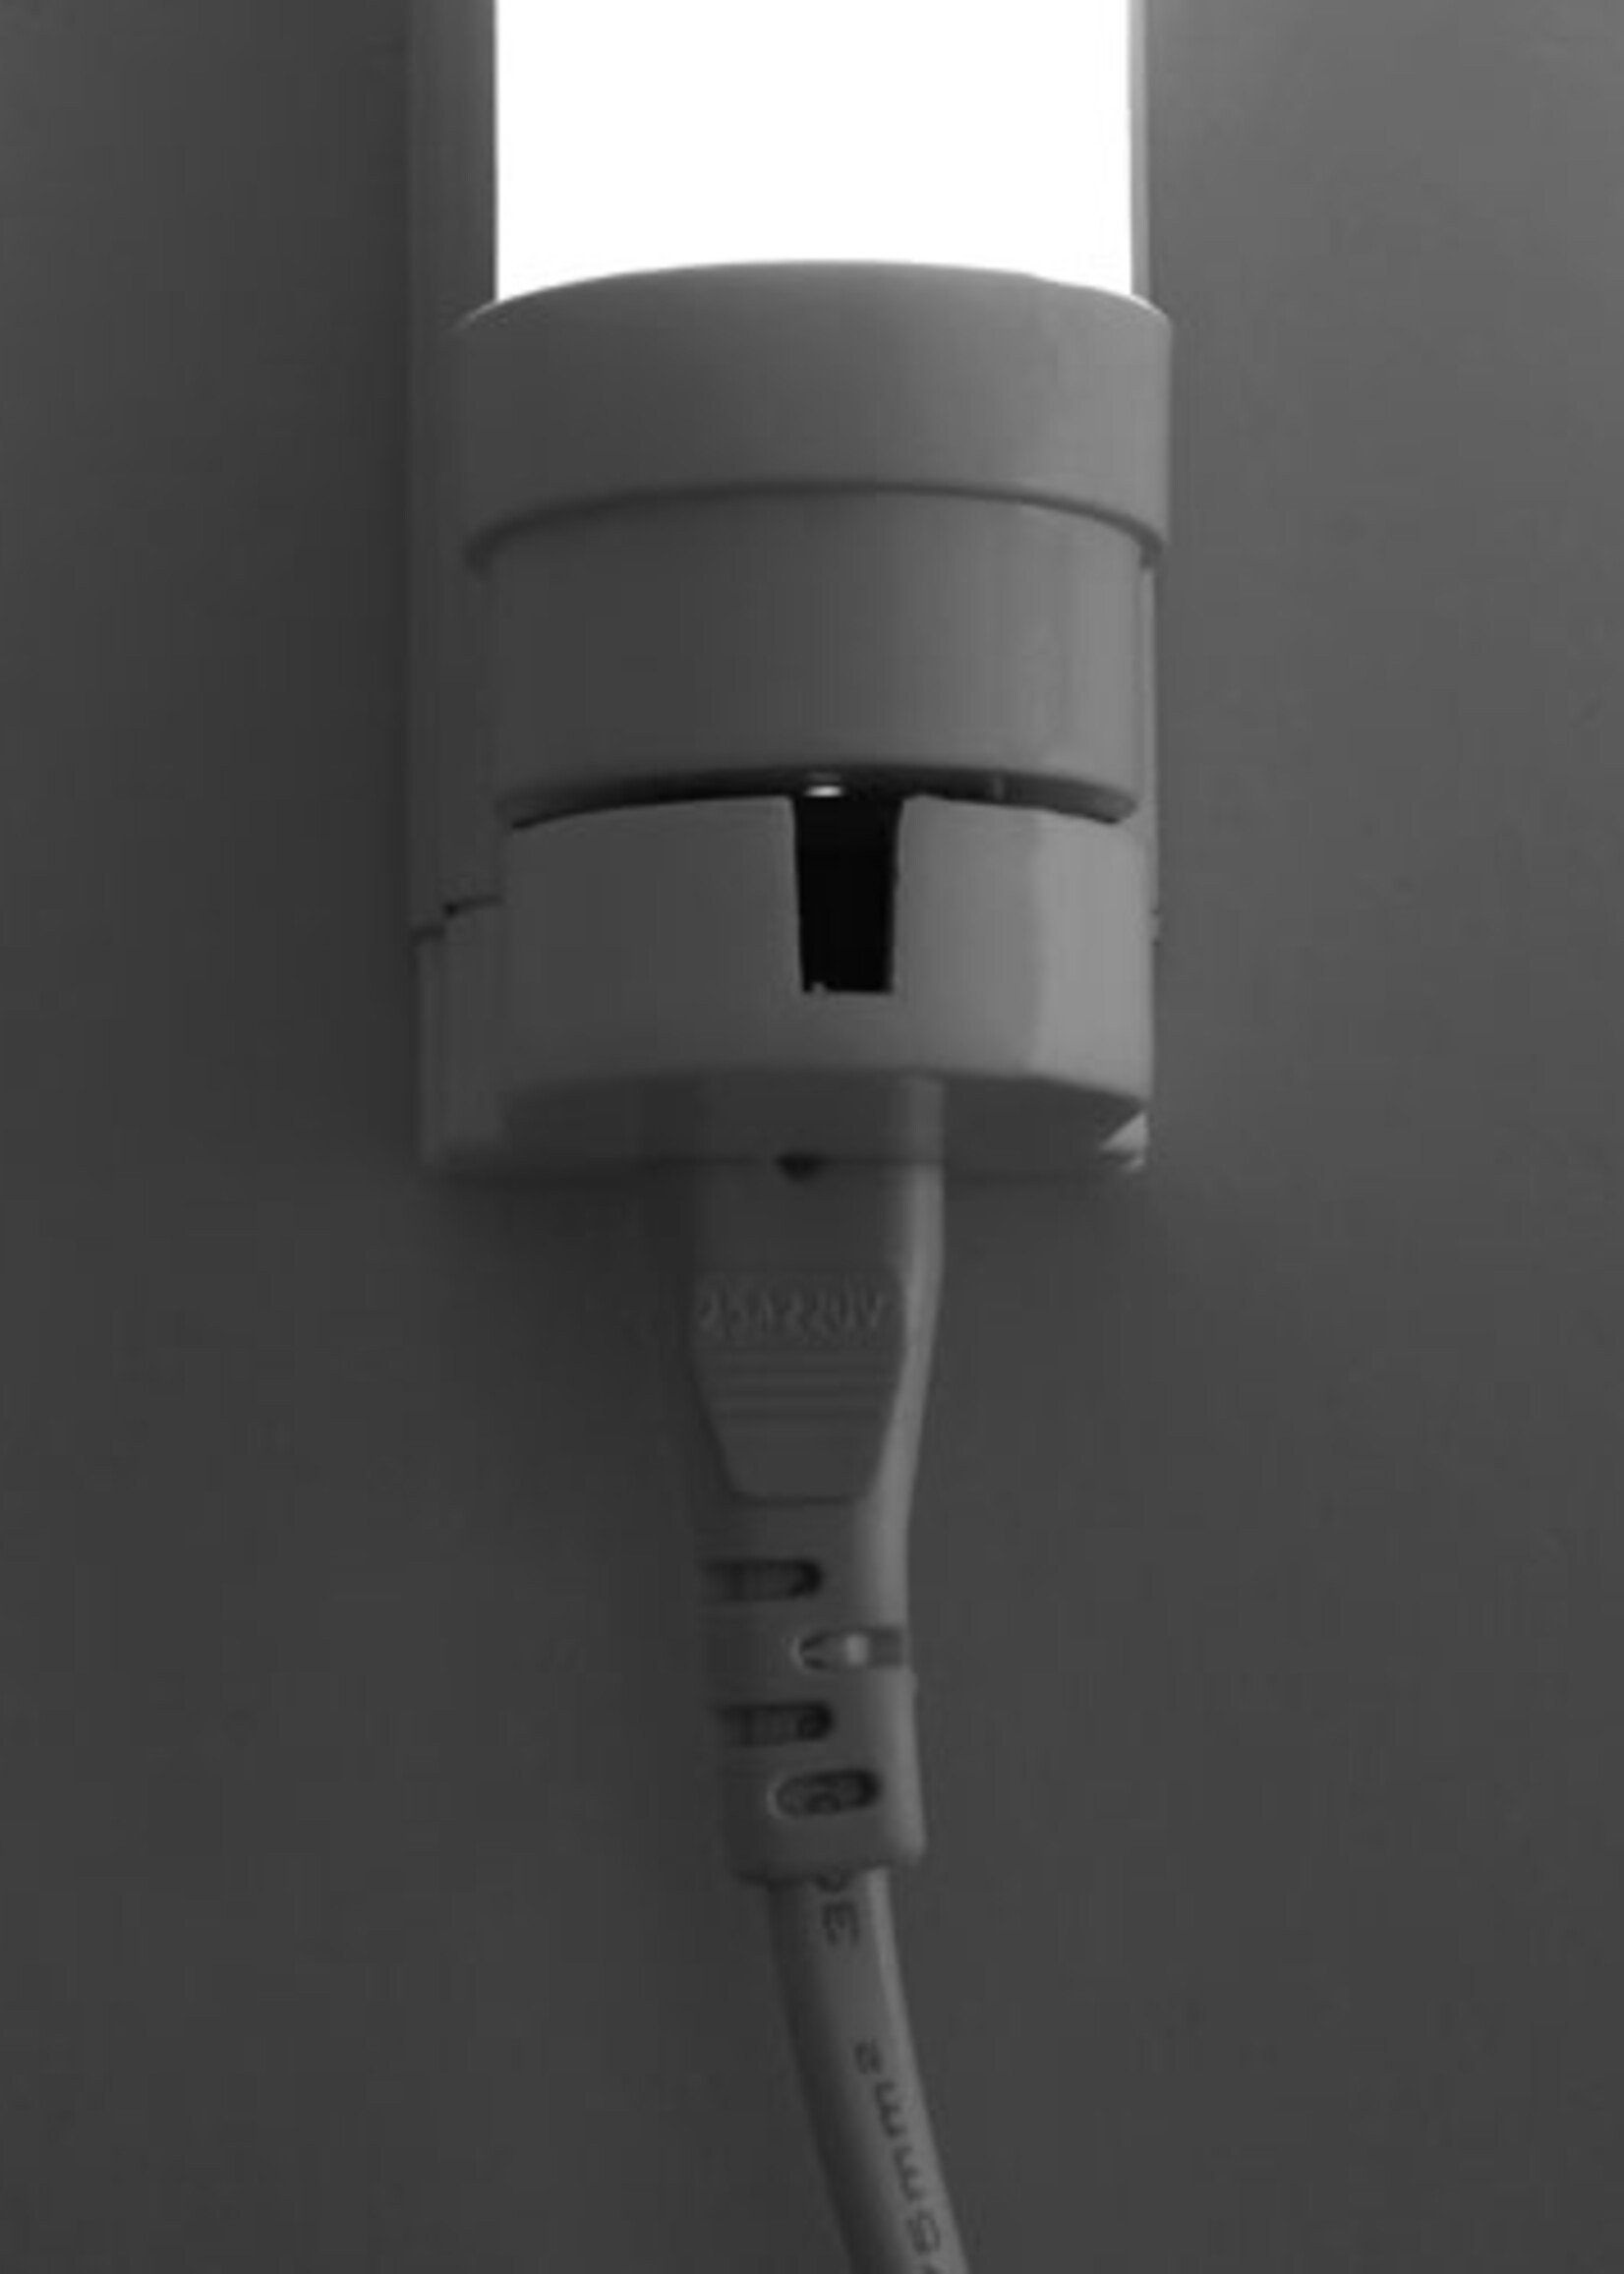 LEDWINKEL-Online LED Tube Light T8 120cm 18W 140lm/W - Pro High lumen